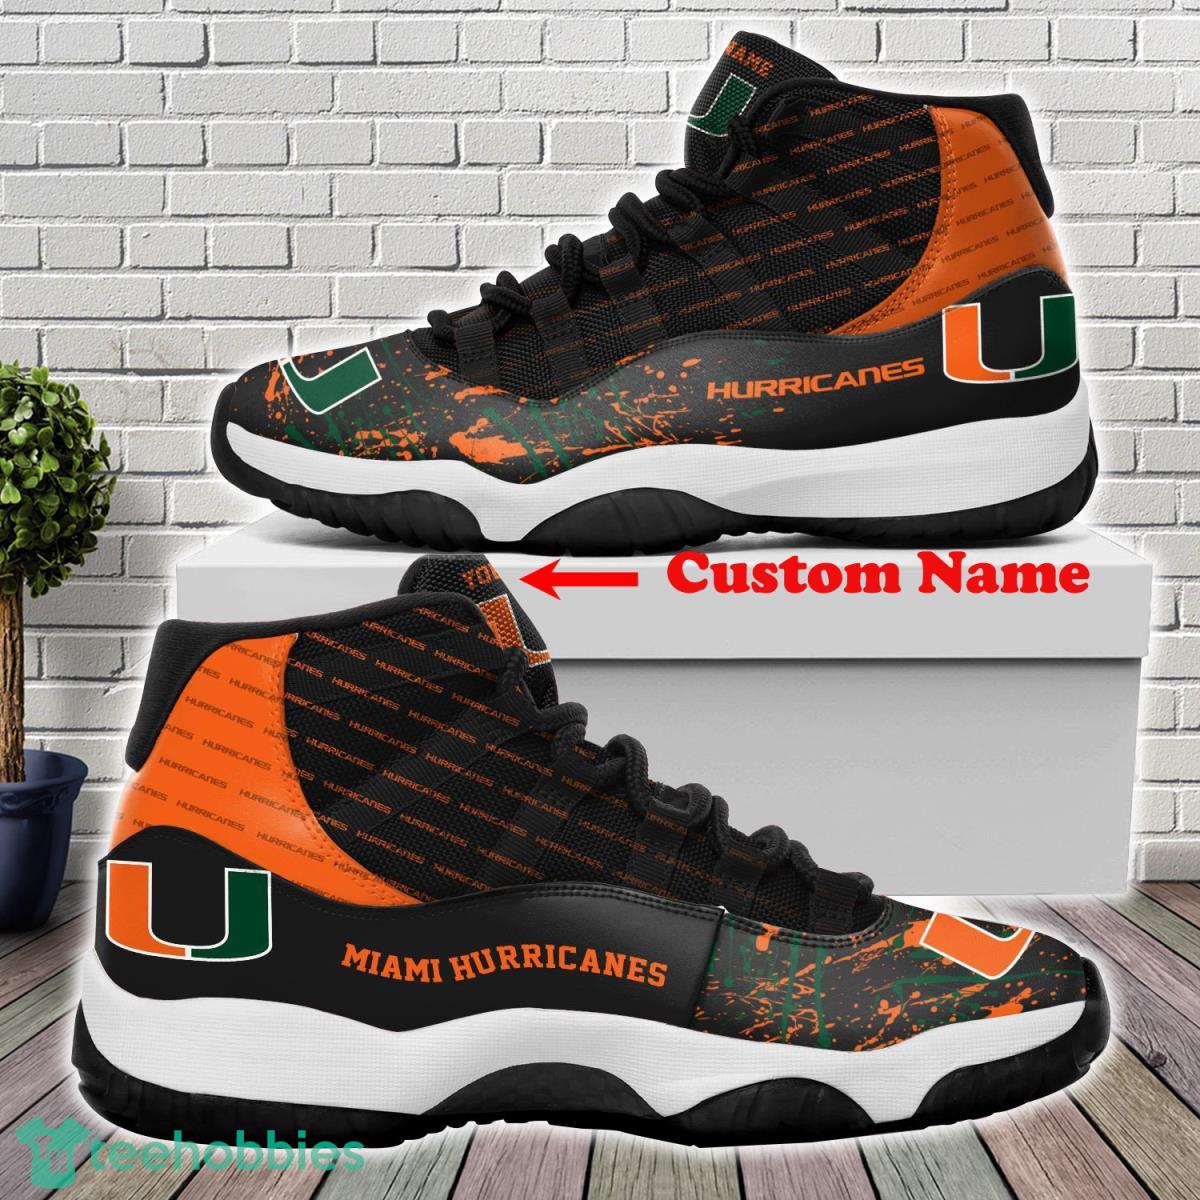 Miami Hurricanes Football Team Air Jordan 11 Custom Name Sneakers For Fans Product Photo 1